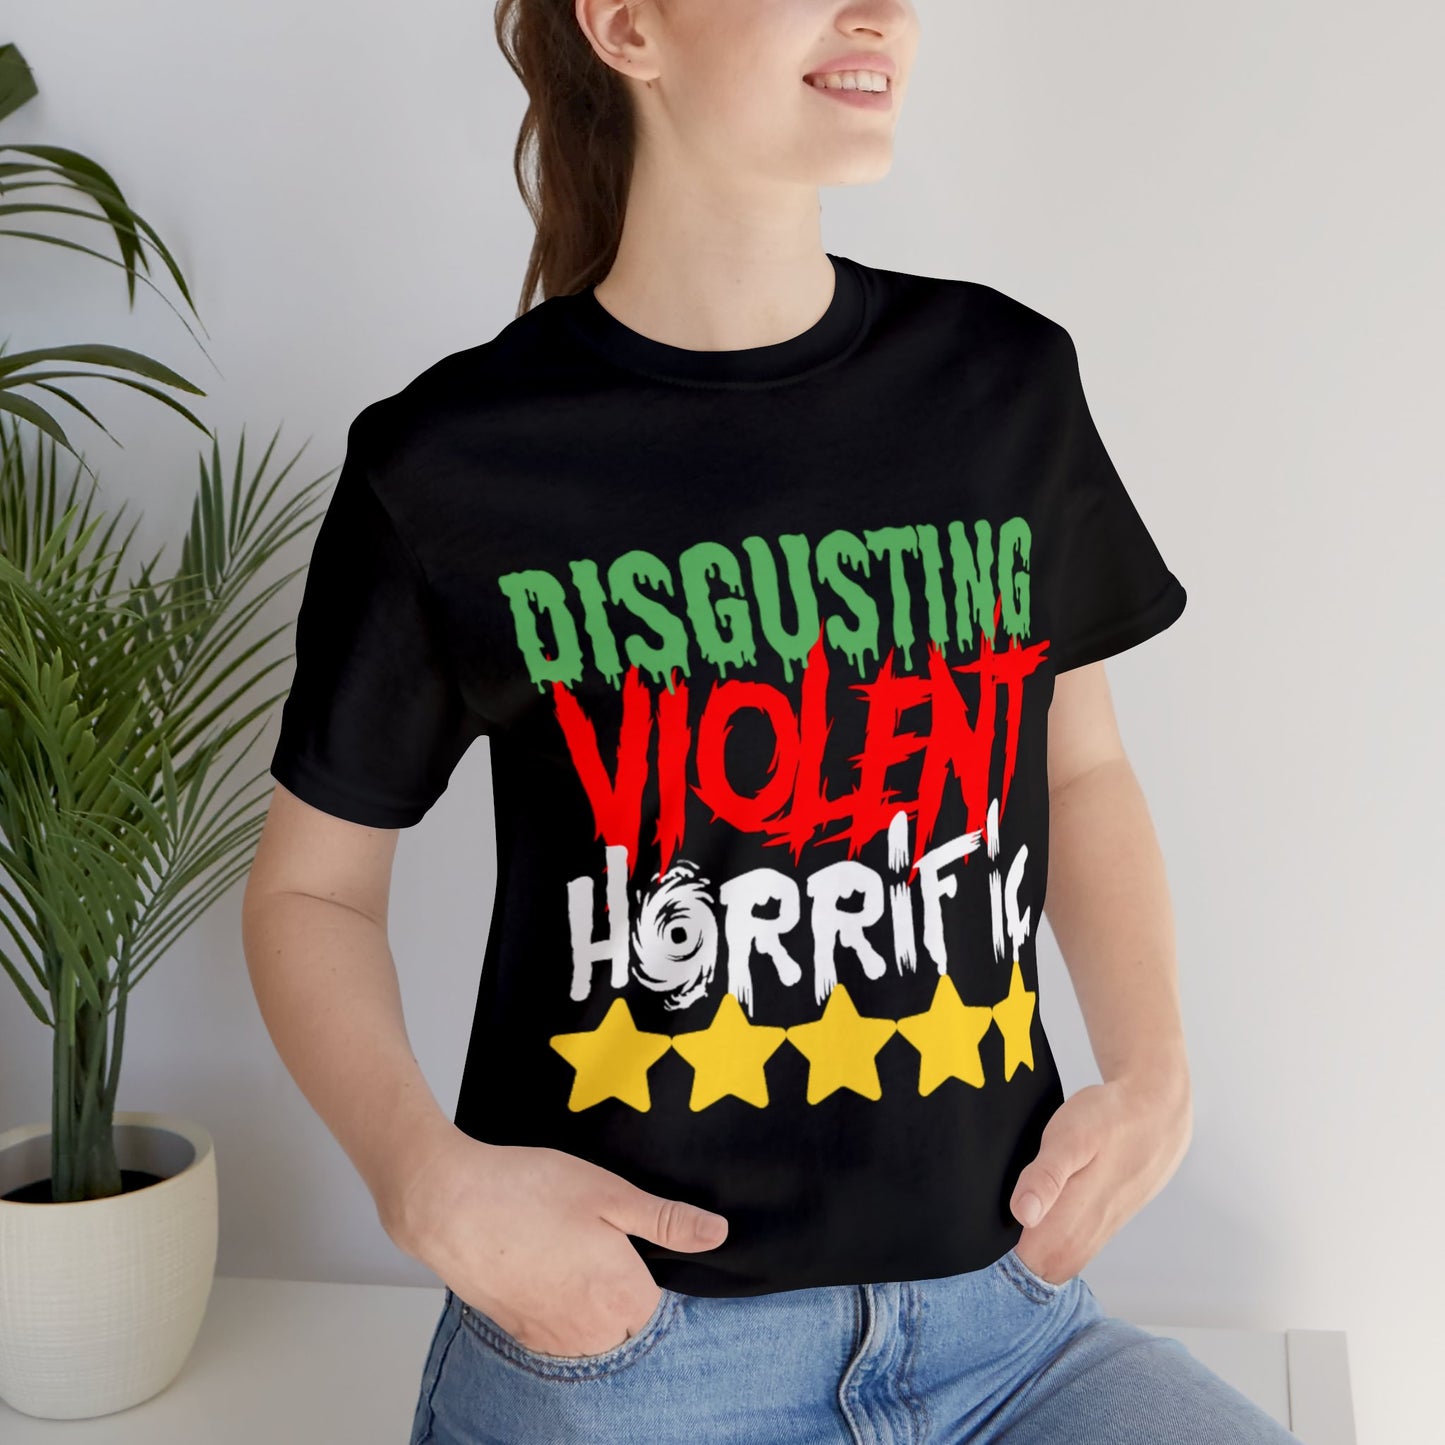 Disgusting. Violent. Horrific. 5 Stars T-Shirt